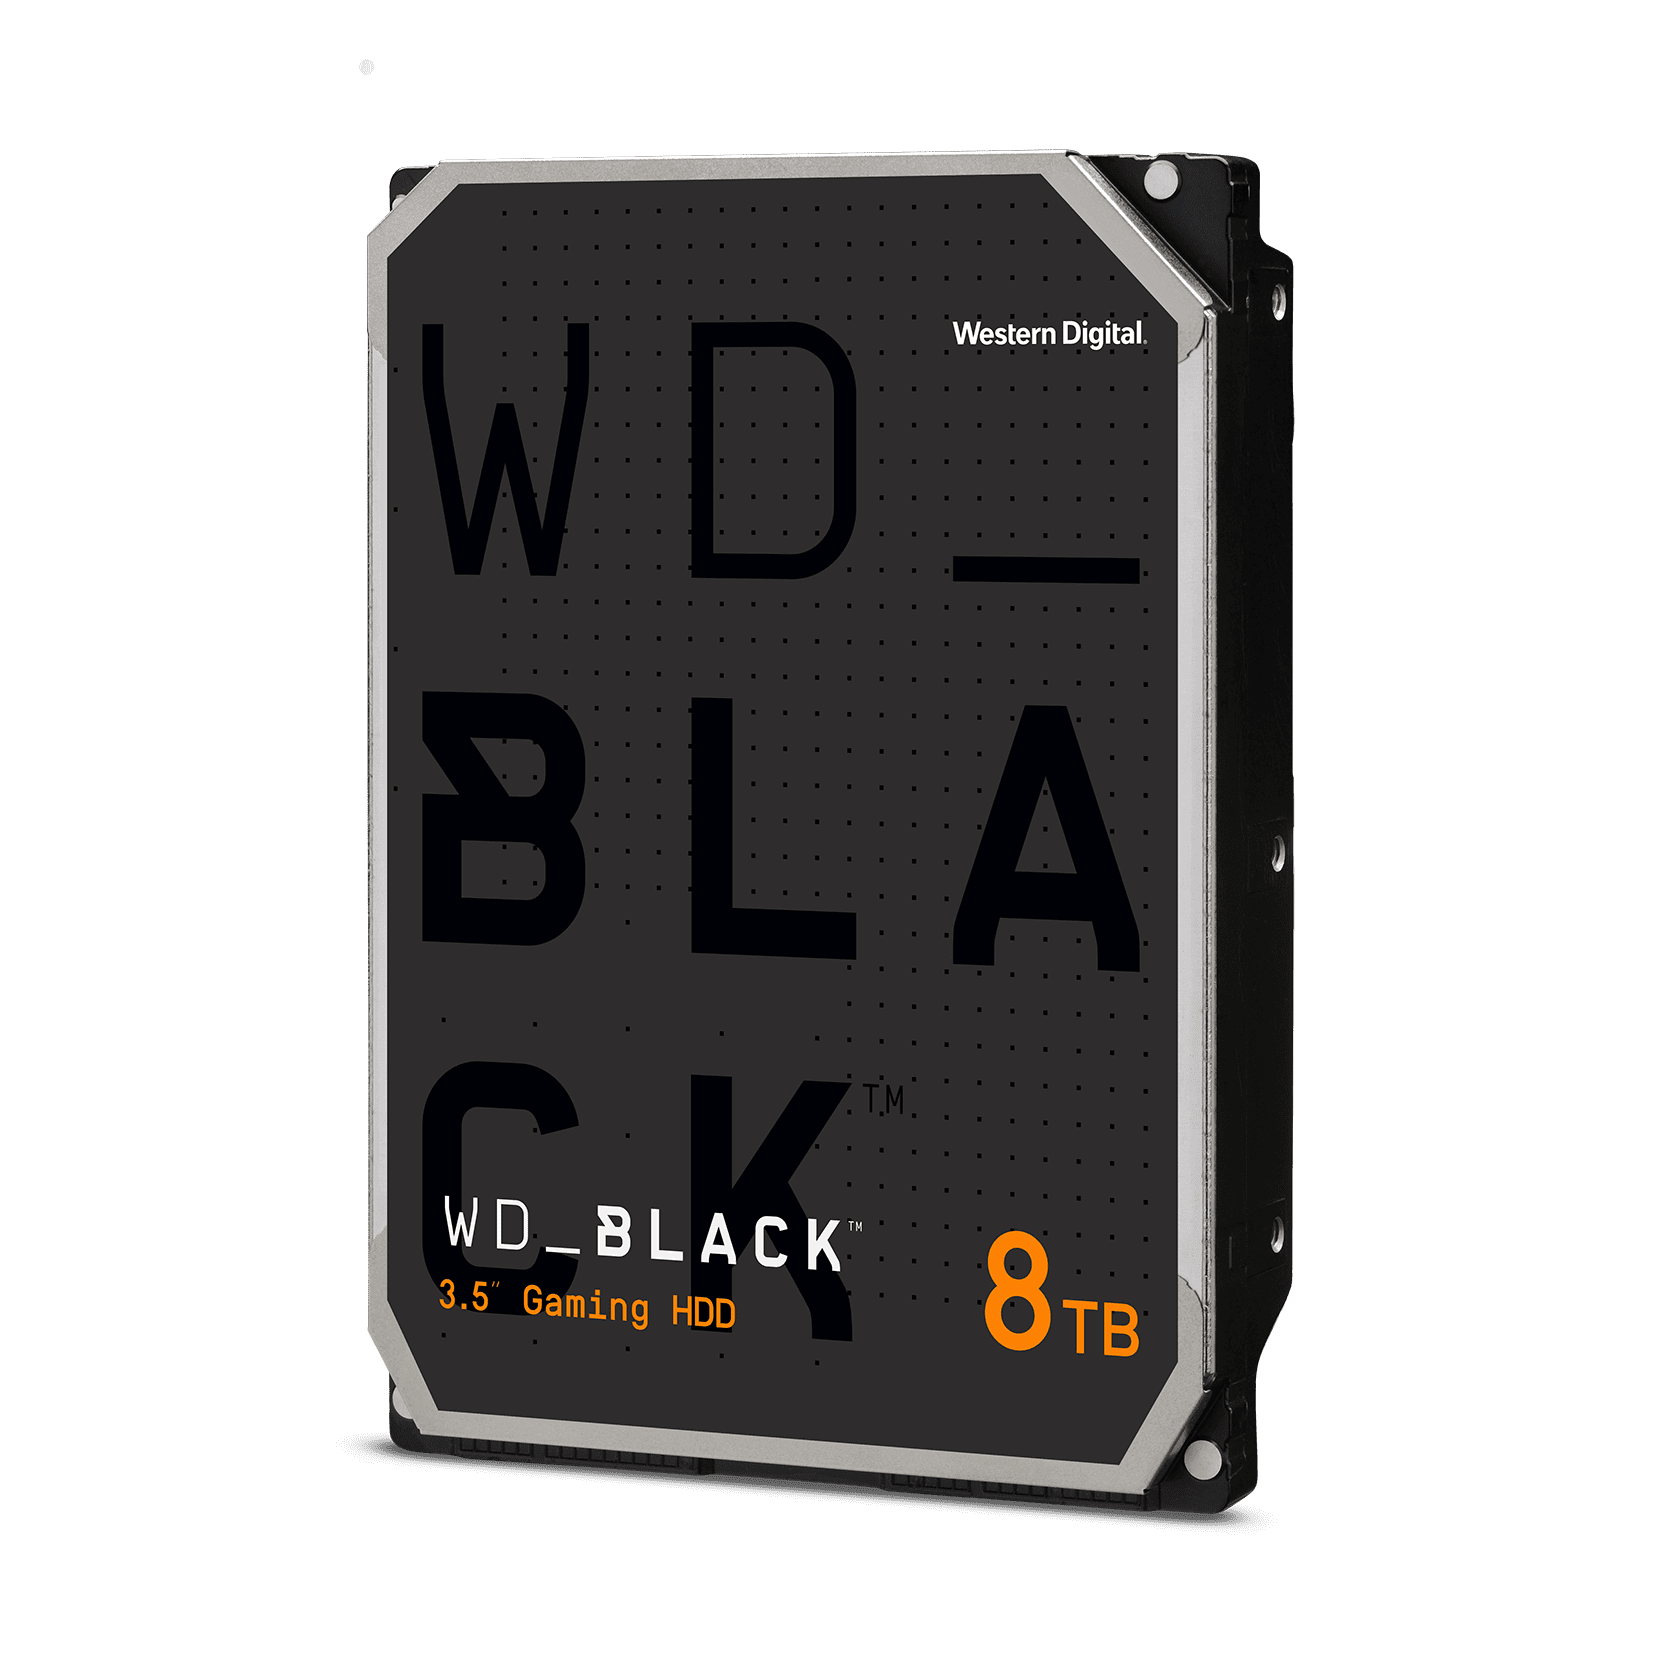 WD_BLACK 8TB 3.5'' Internal Gaming Hard Drive, 128MB Cache 